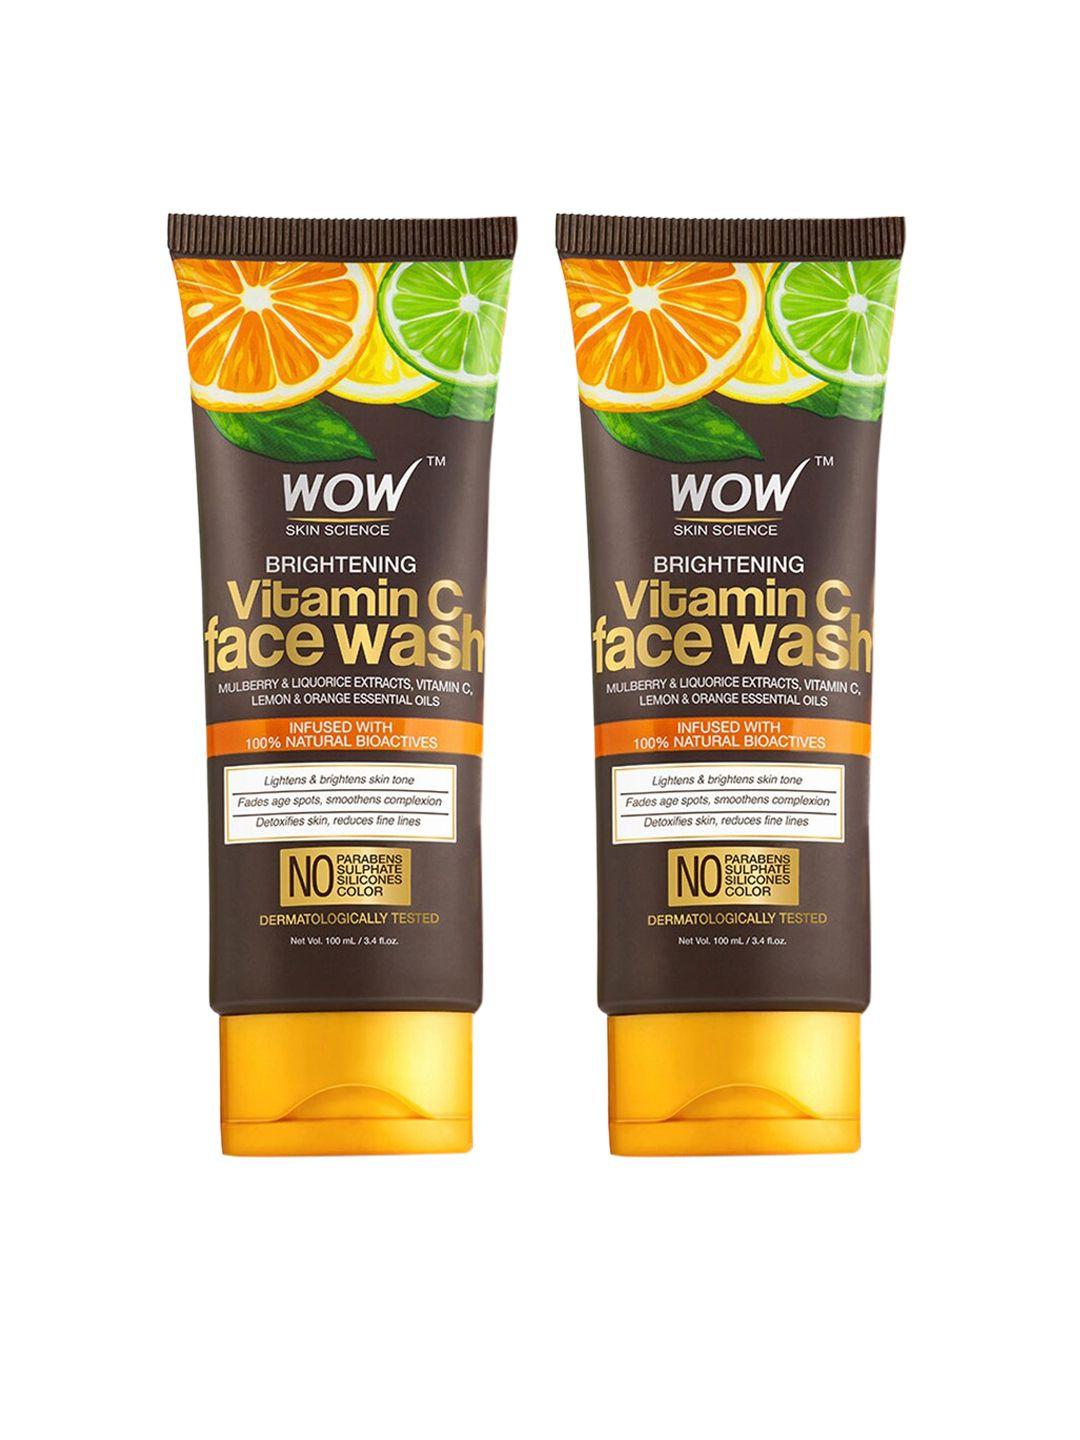 wow skin science set of 2 brightening vitamin c face wash